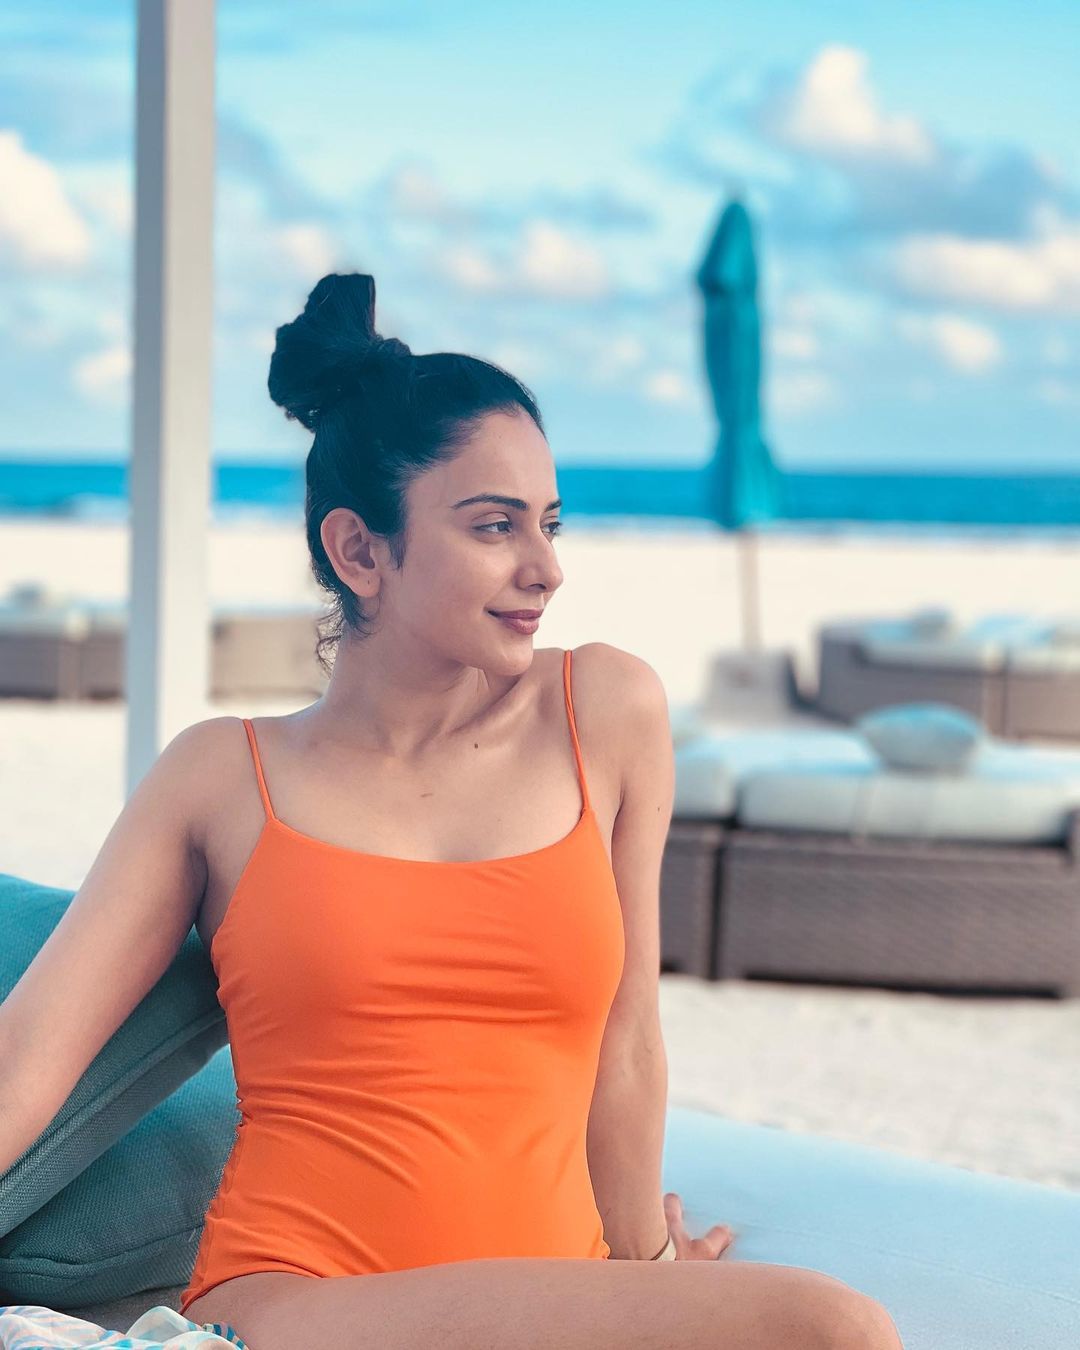 Rakul Preetsex - Rakul Preet Singh Slays in Sexy Orange Monokini as She Drops Hot Vacation  Pic - Check Viral Photo